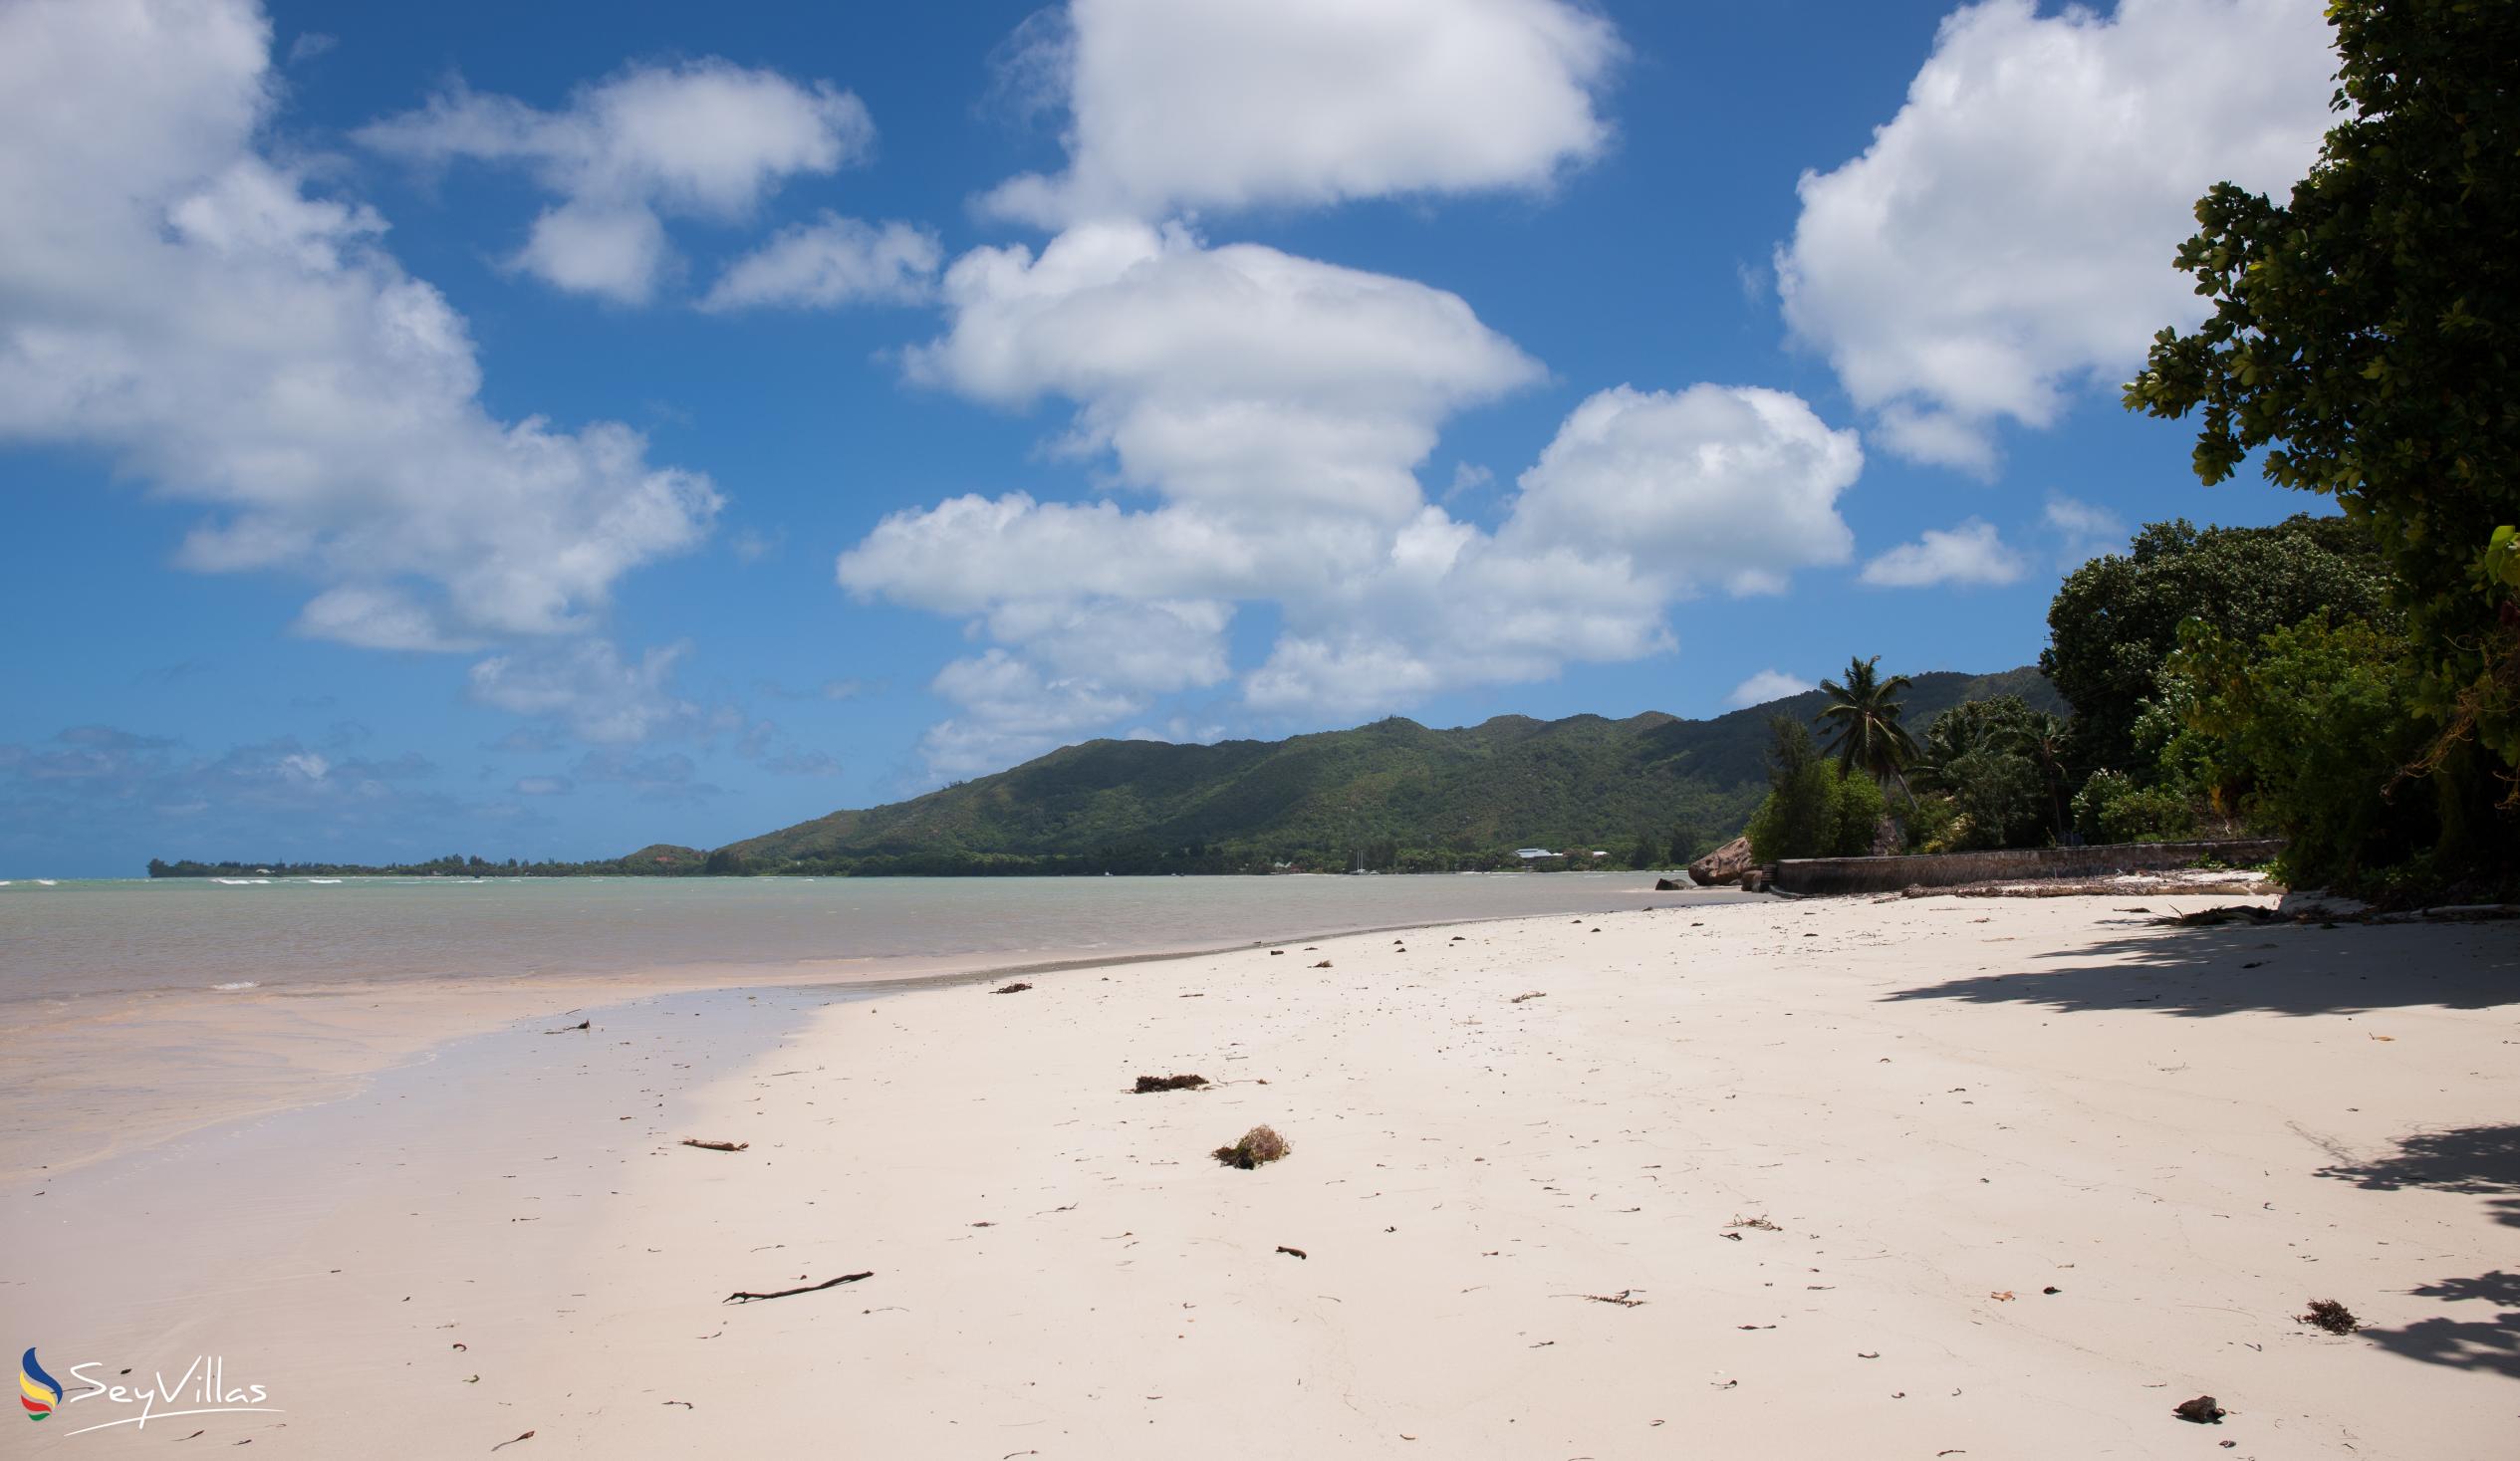 Photo 2: Anse Citron - Praslin (Seychelles)